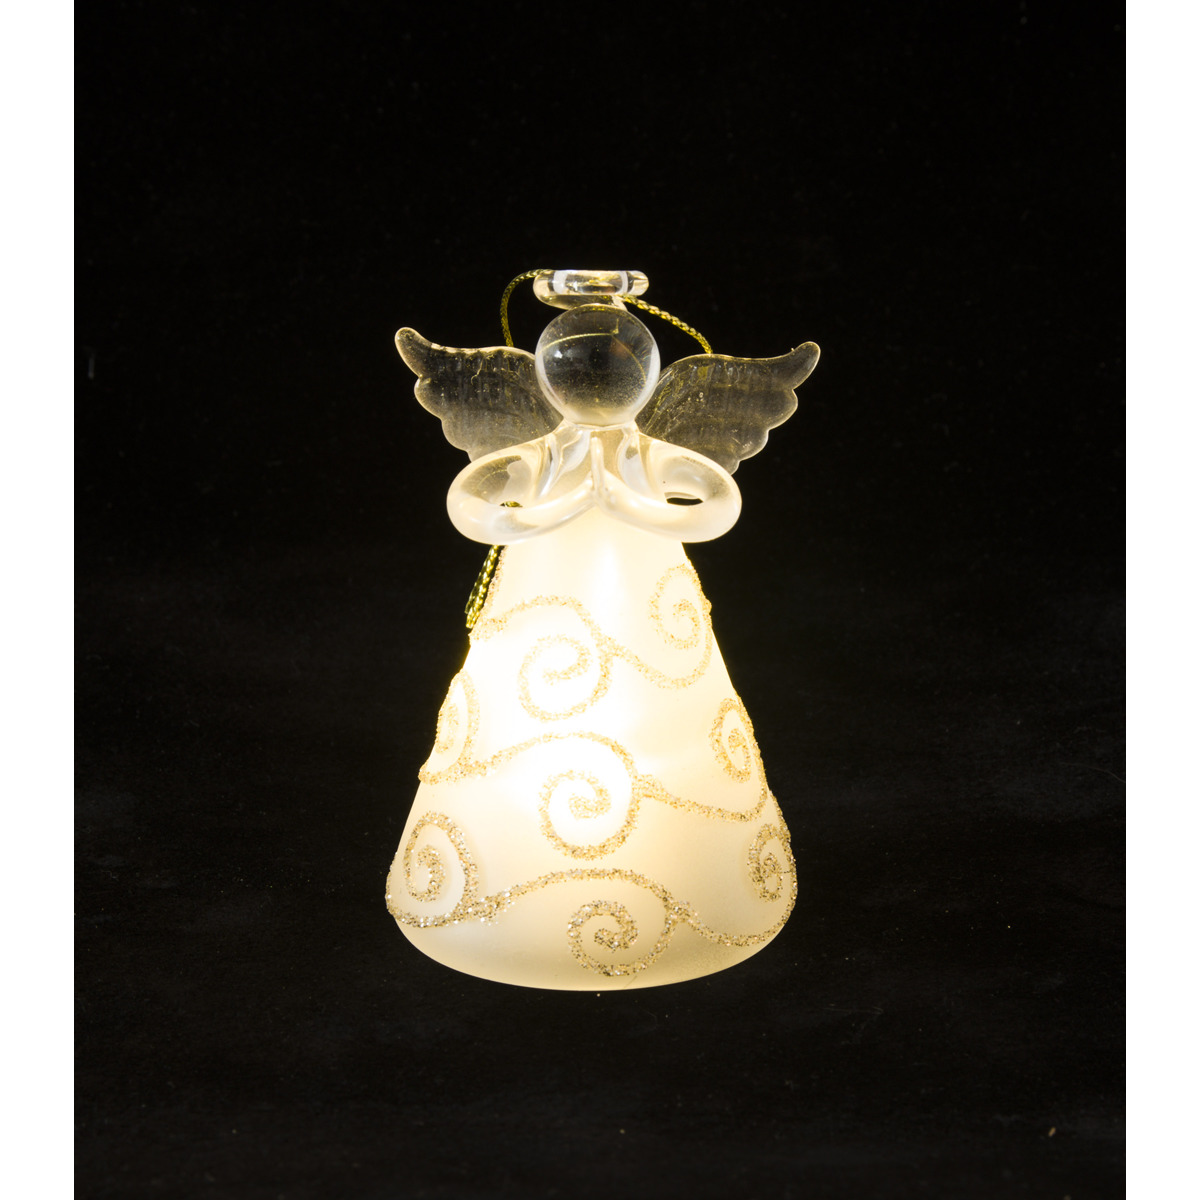 Ange en verre robe nacrée avec liseret or, lumineux LED H. 8 cm, SERIE DE 3 ANGES ASSORTIS